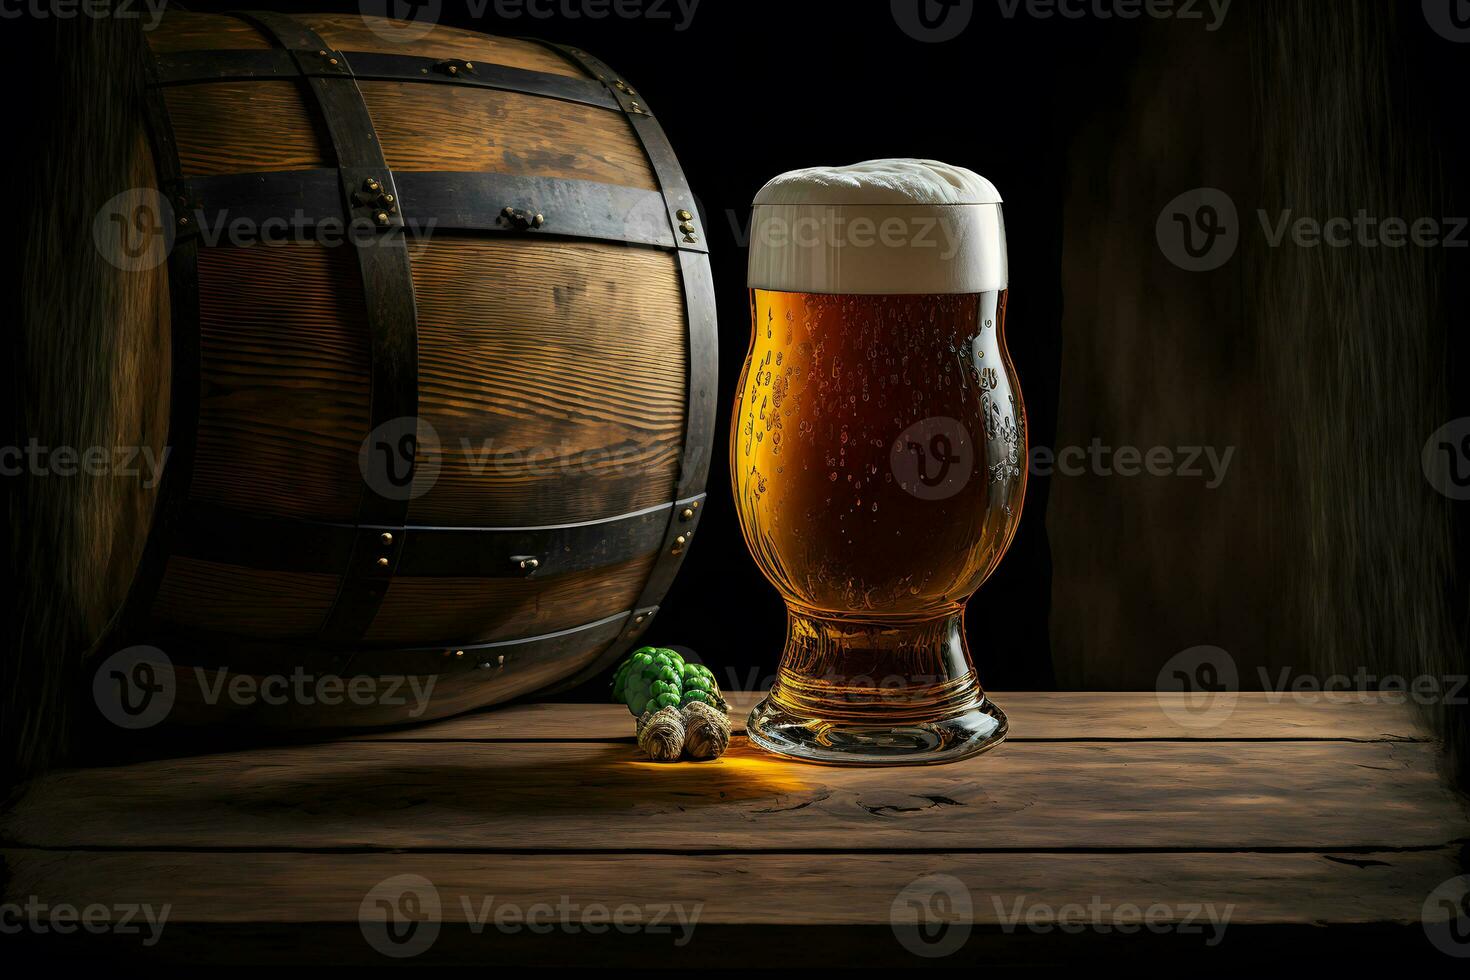 mooi bier met schuim in klassiek bier glas in donker tafereel. neurale netwerk gegenereerd kunst foto